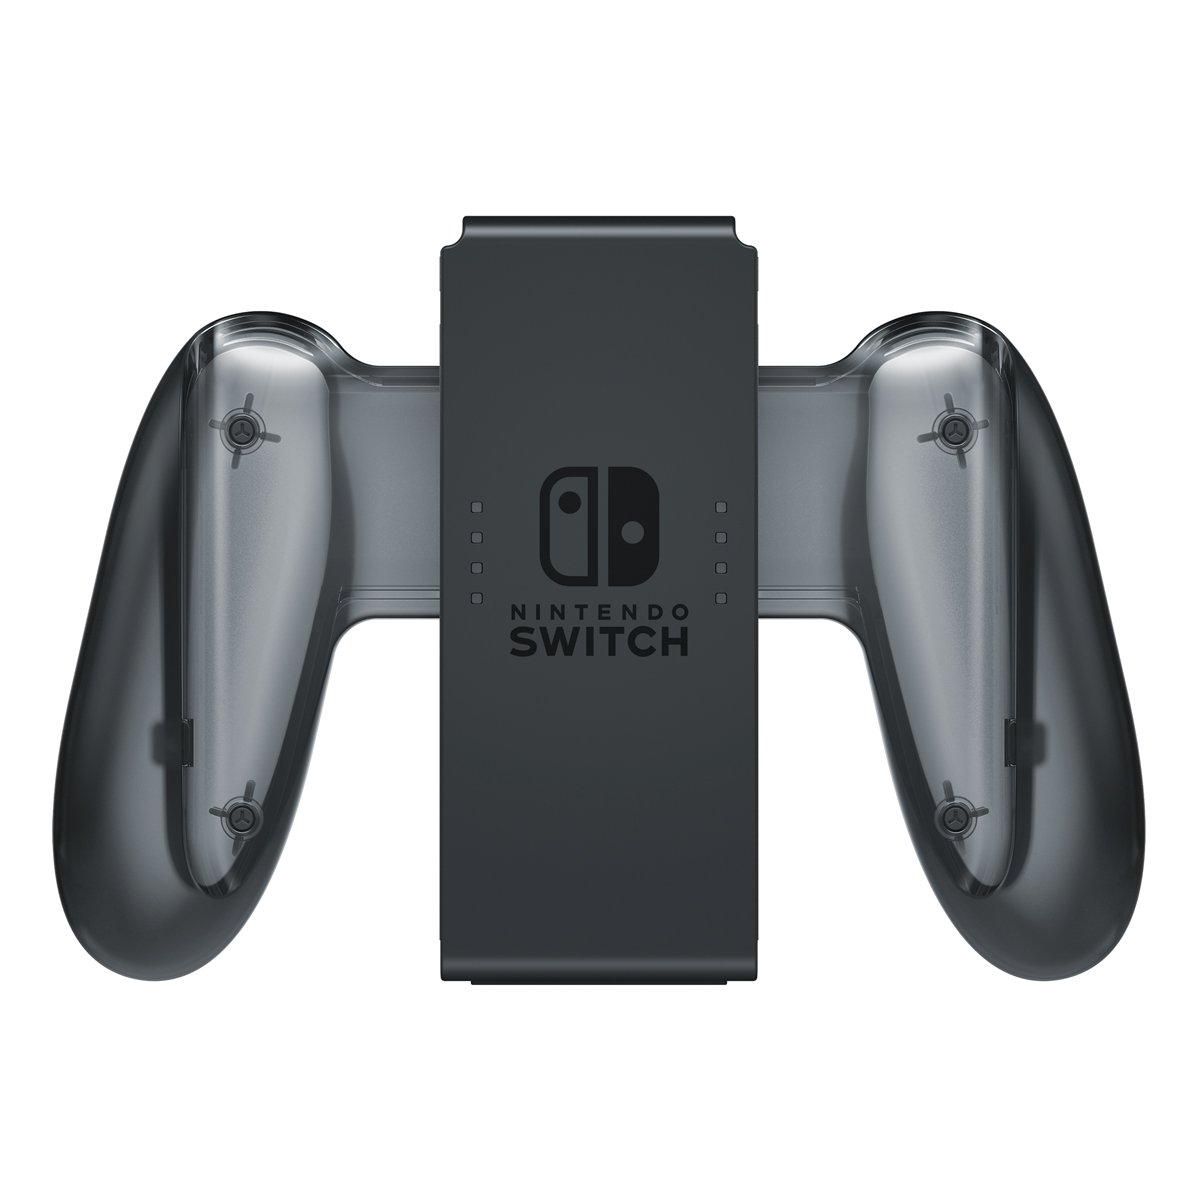 Nintendo Joy-Con charging grip from Nintendo.